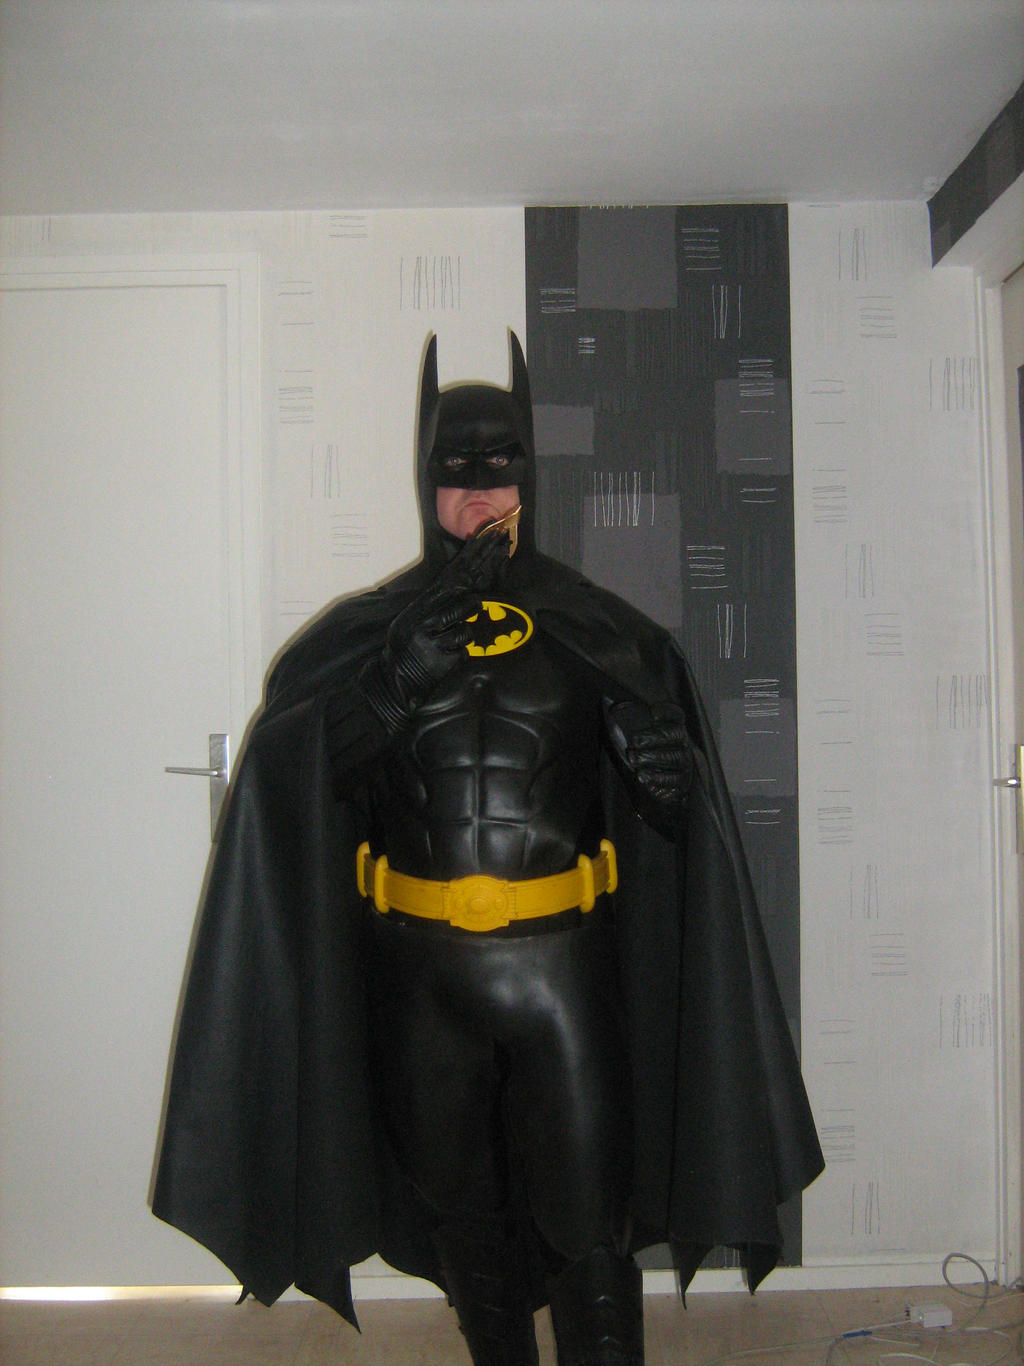 1989 Batman Costume Replica by Syl001 on DeviantArt